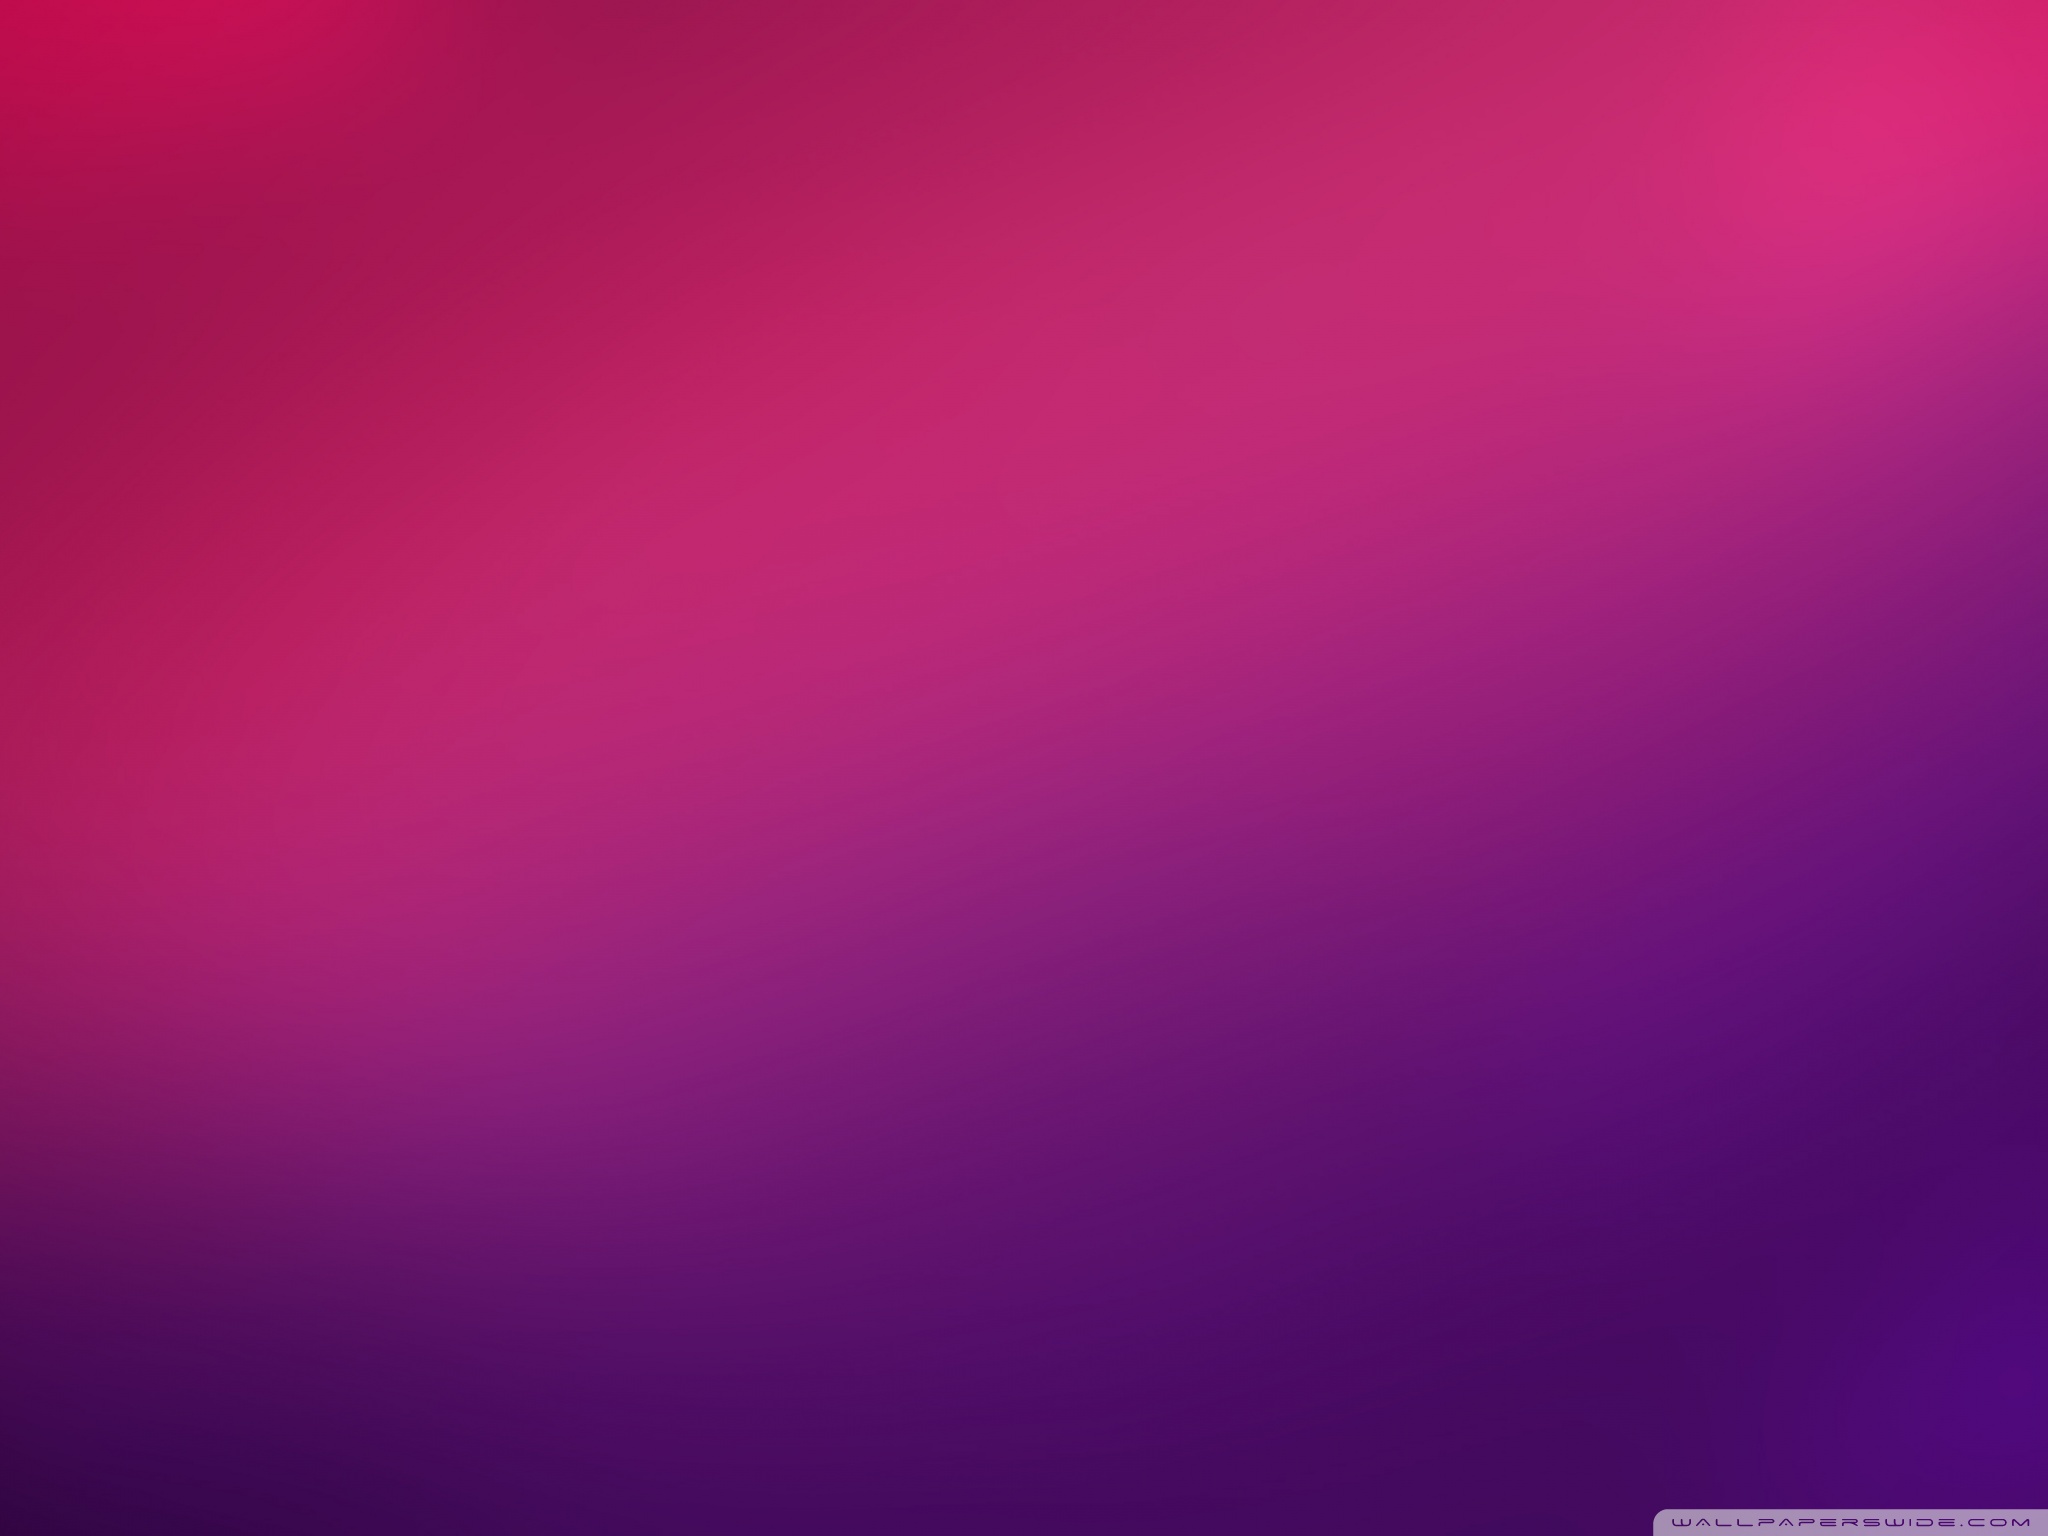 Standard - Pink Purple , HD Wallpaper & Backgrounds